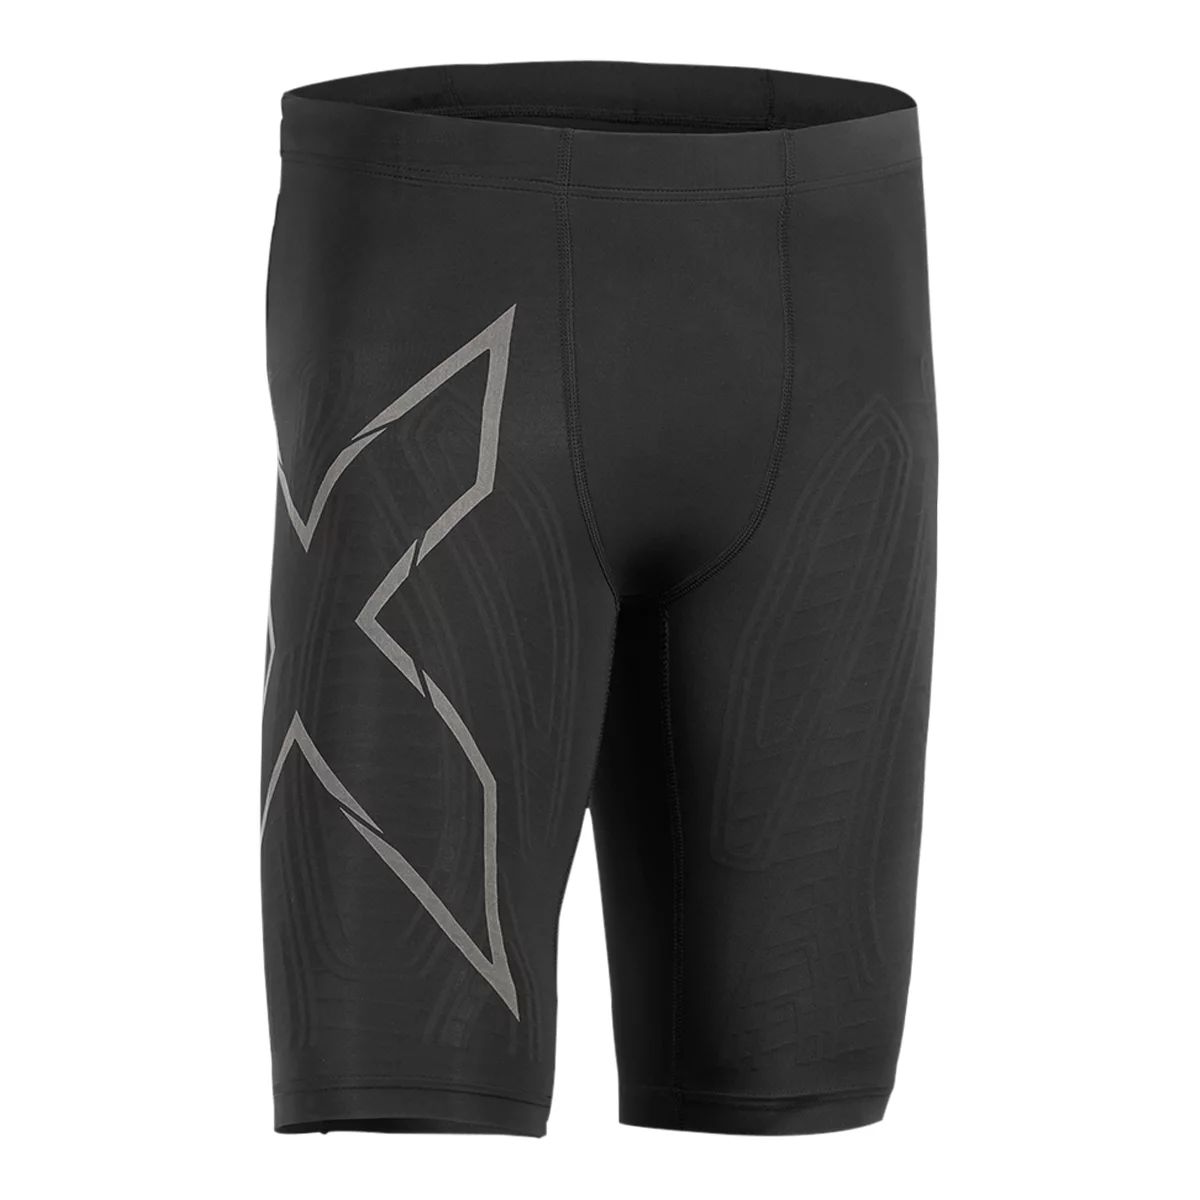 Buy 2XU Compression 1/2 Shorts Online